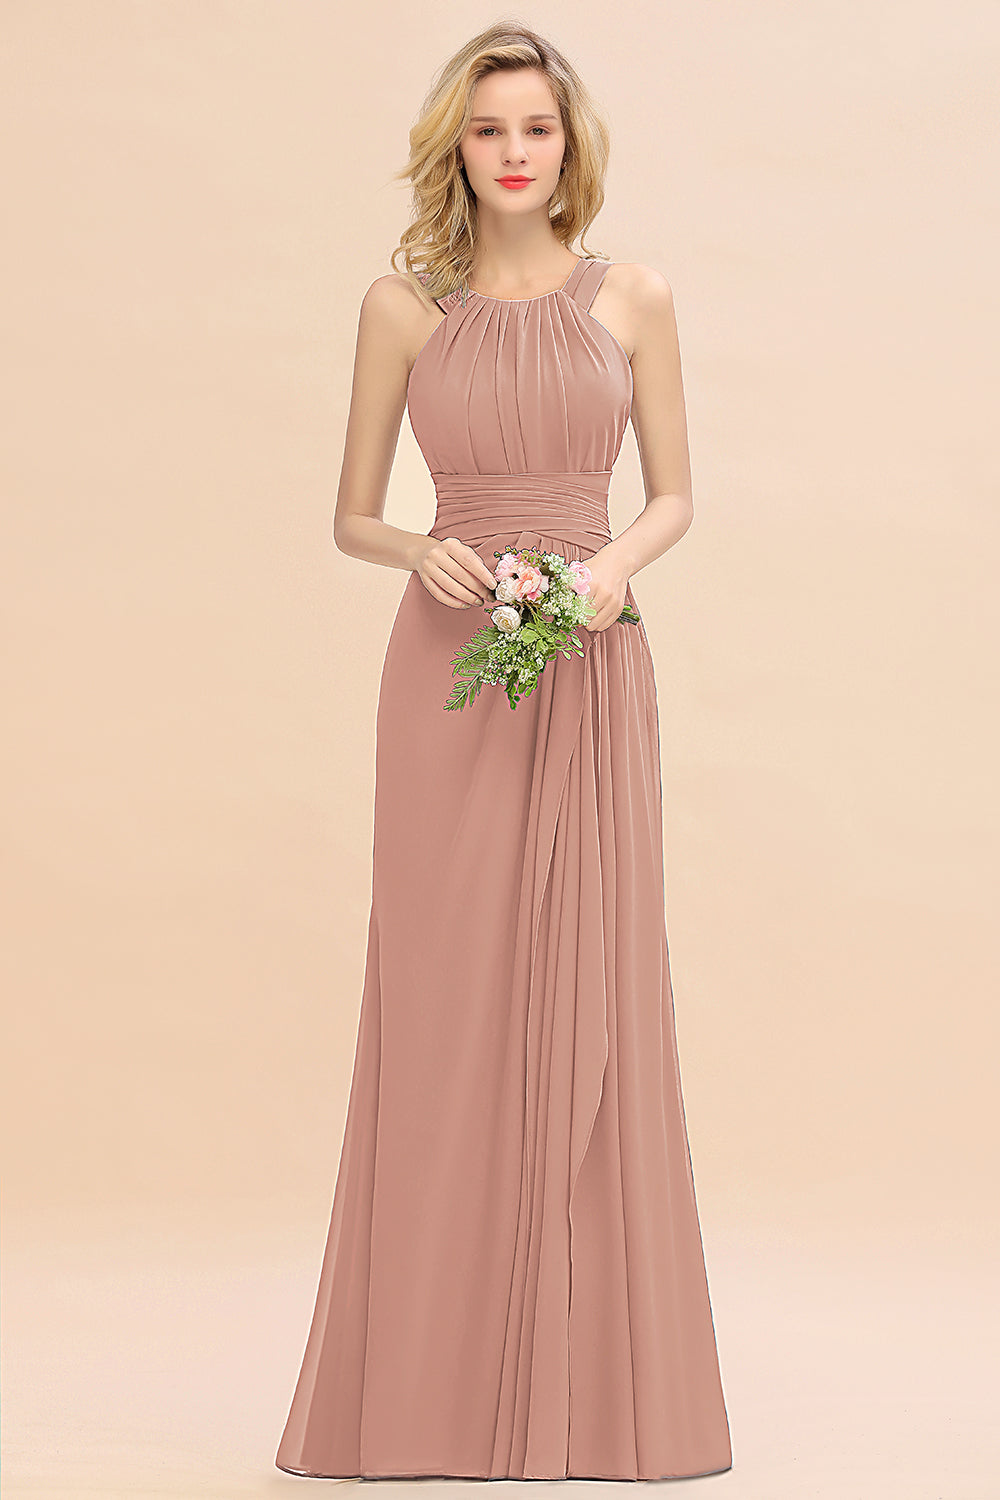 Elegant Round Neck Sleeveless Bridesmaid Dress with Ruffles-27dress